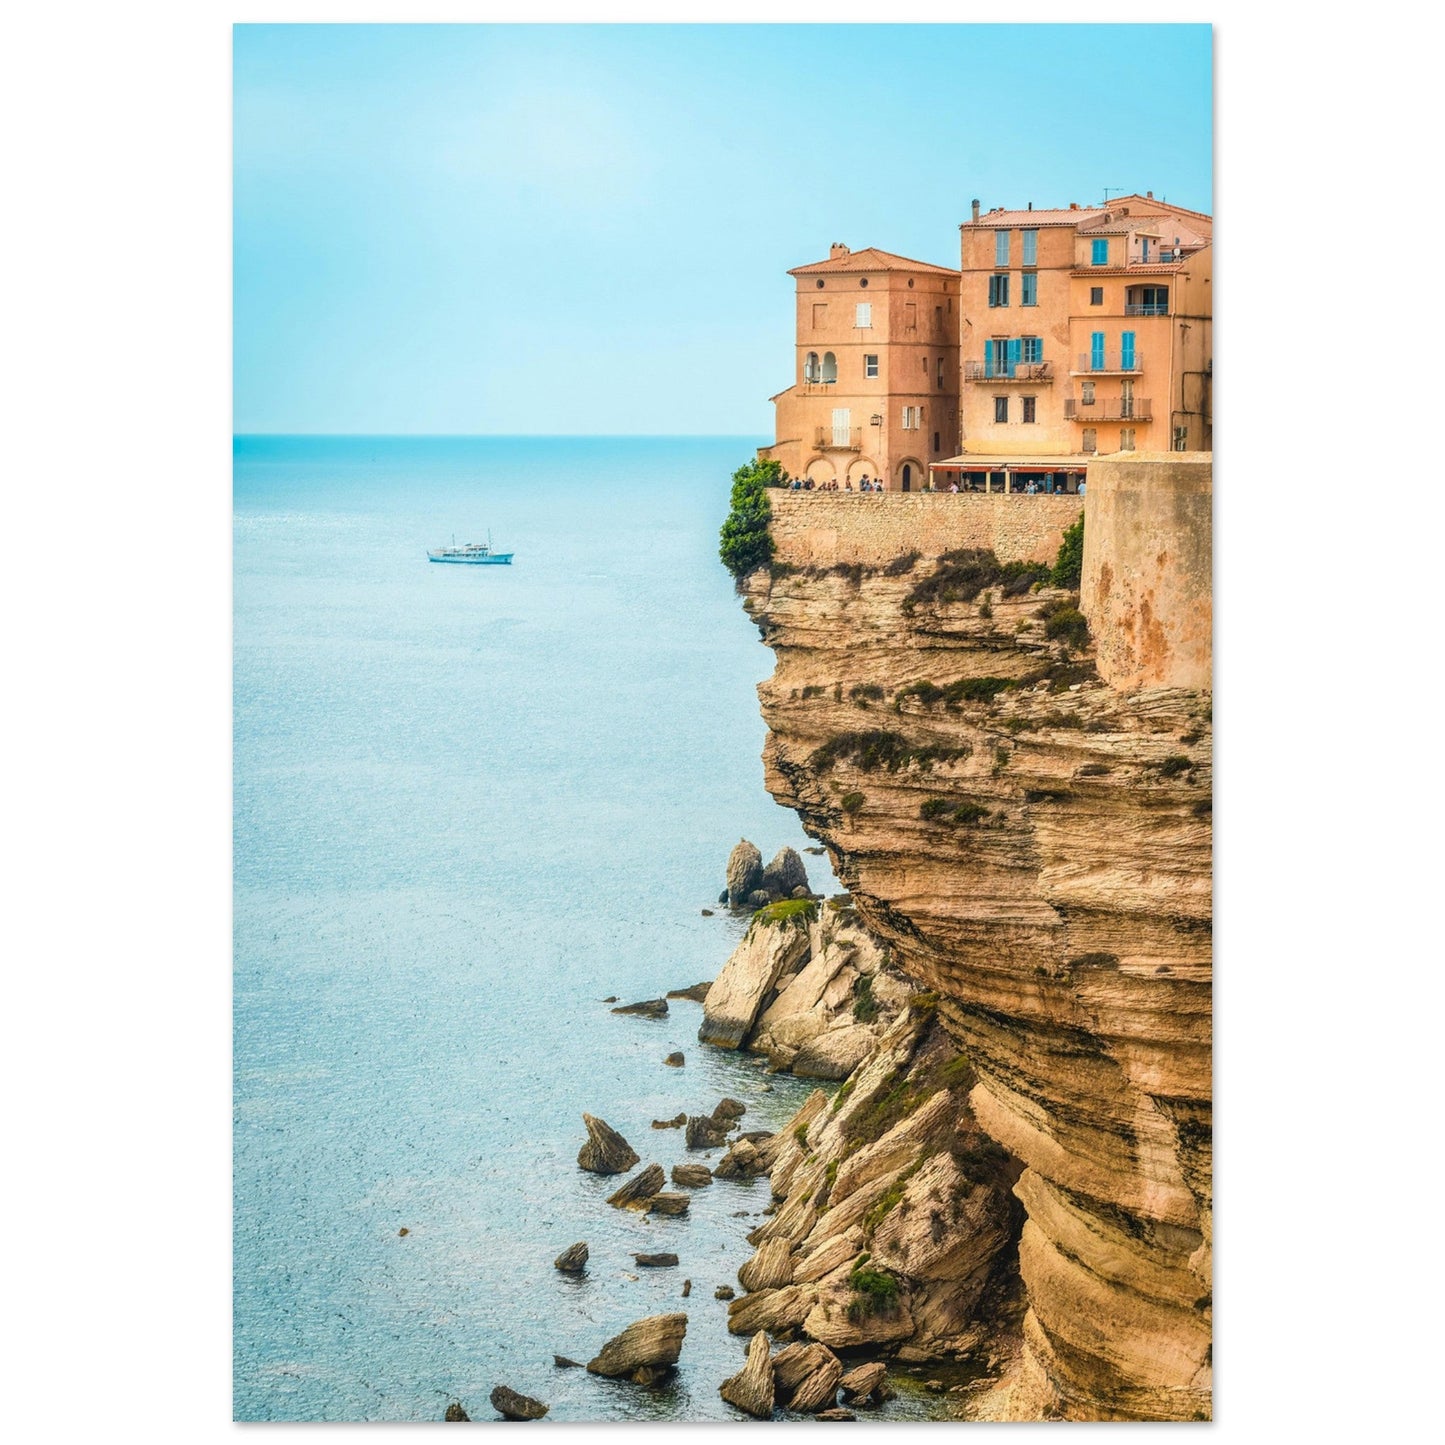 Vente Photo de Bonifacio, Corse #3 - Tableau photo paysage